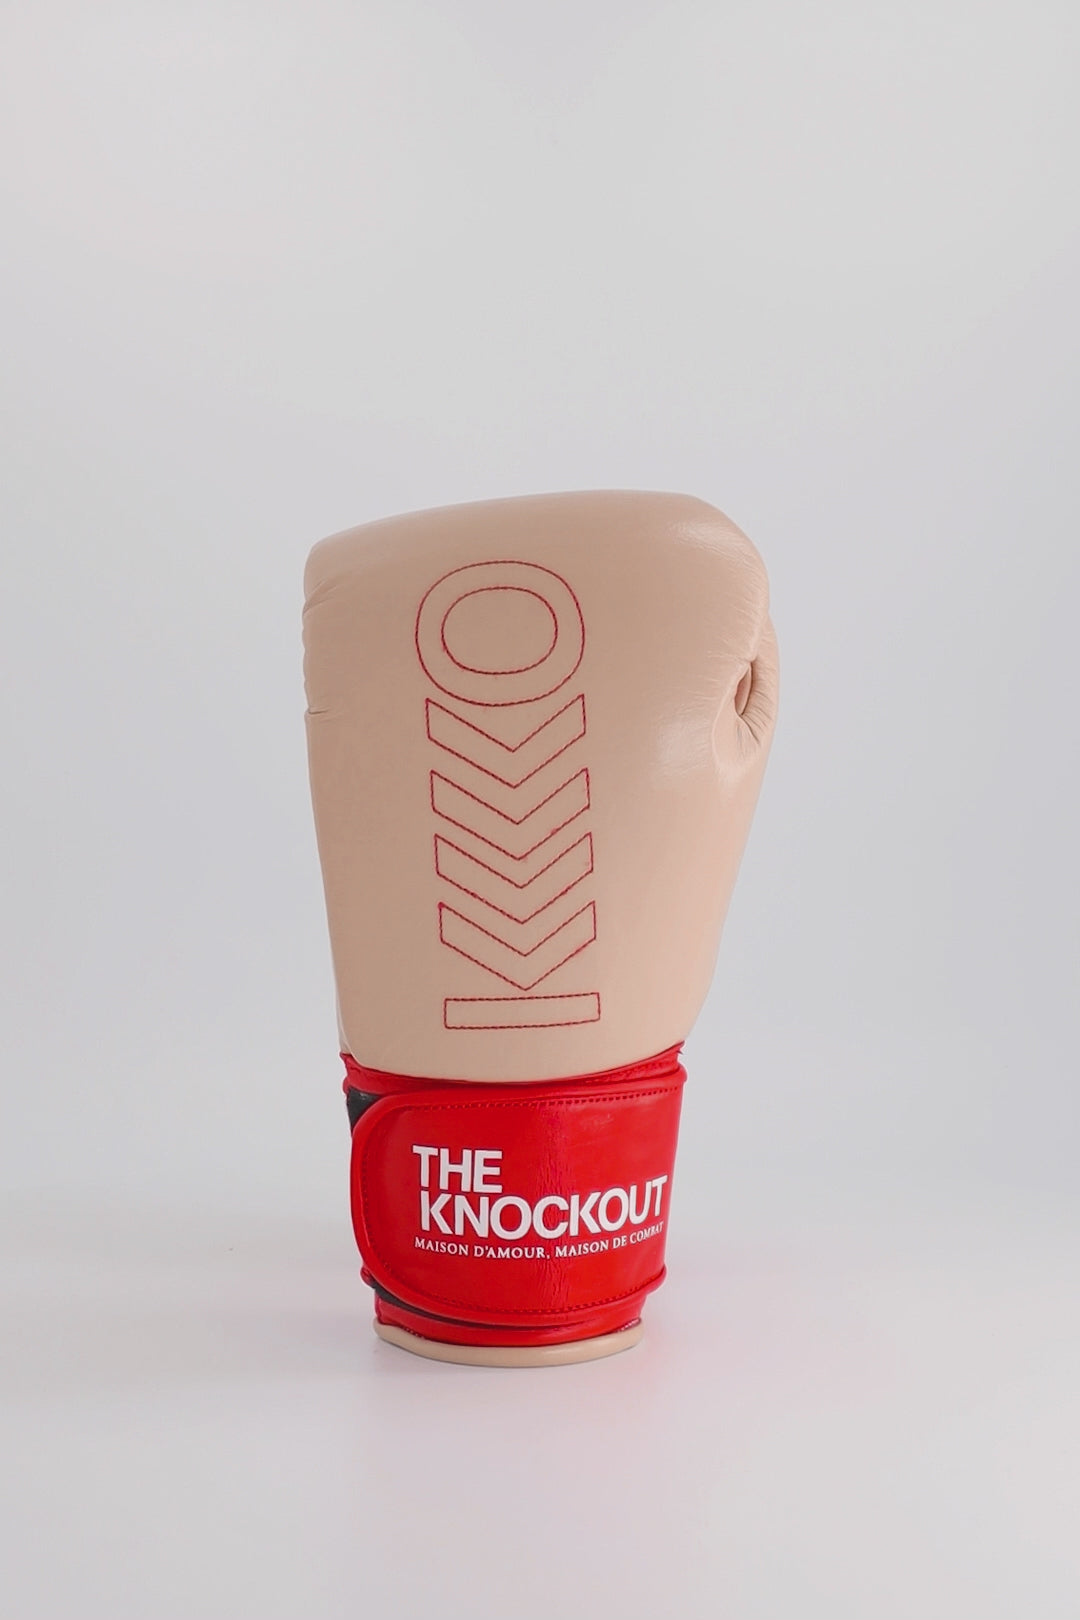 The Knockout Paris Boxing Gloves